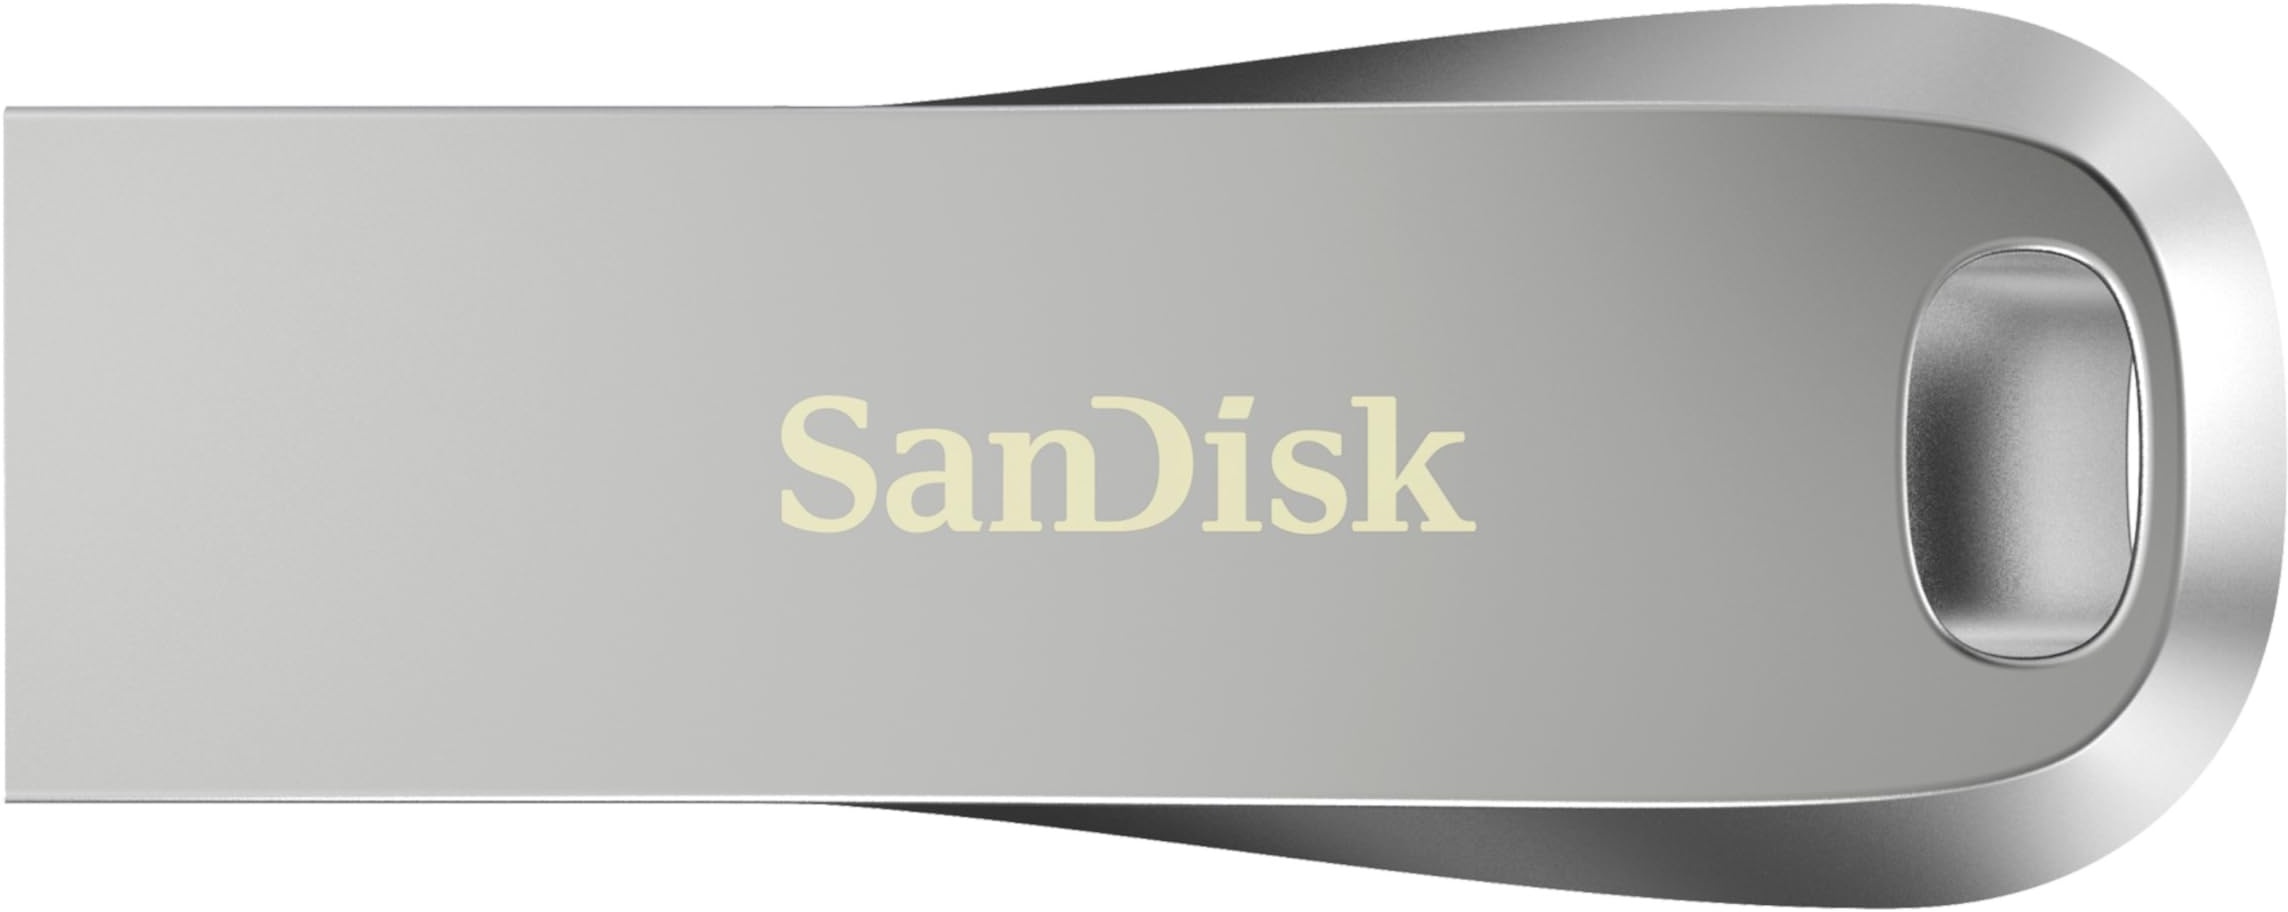 sandisk usb 64 gb usb 3.0